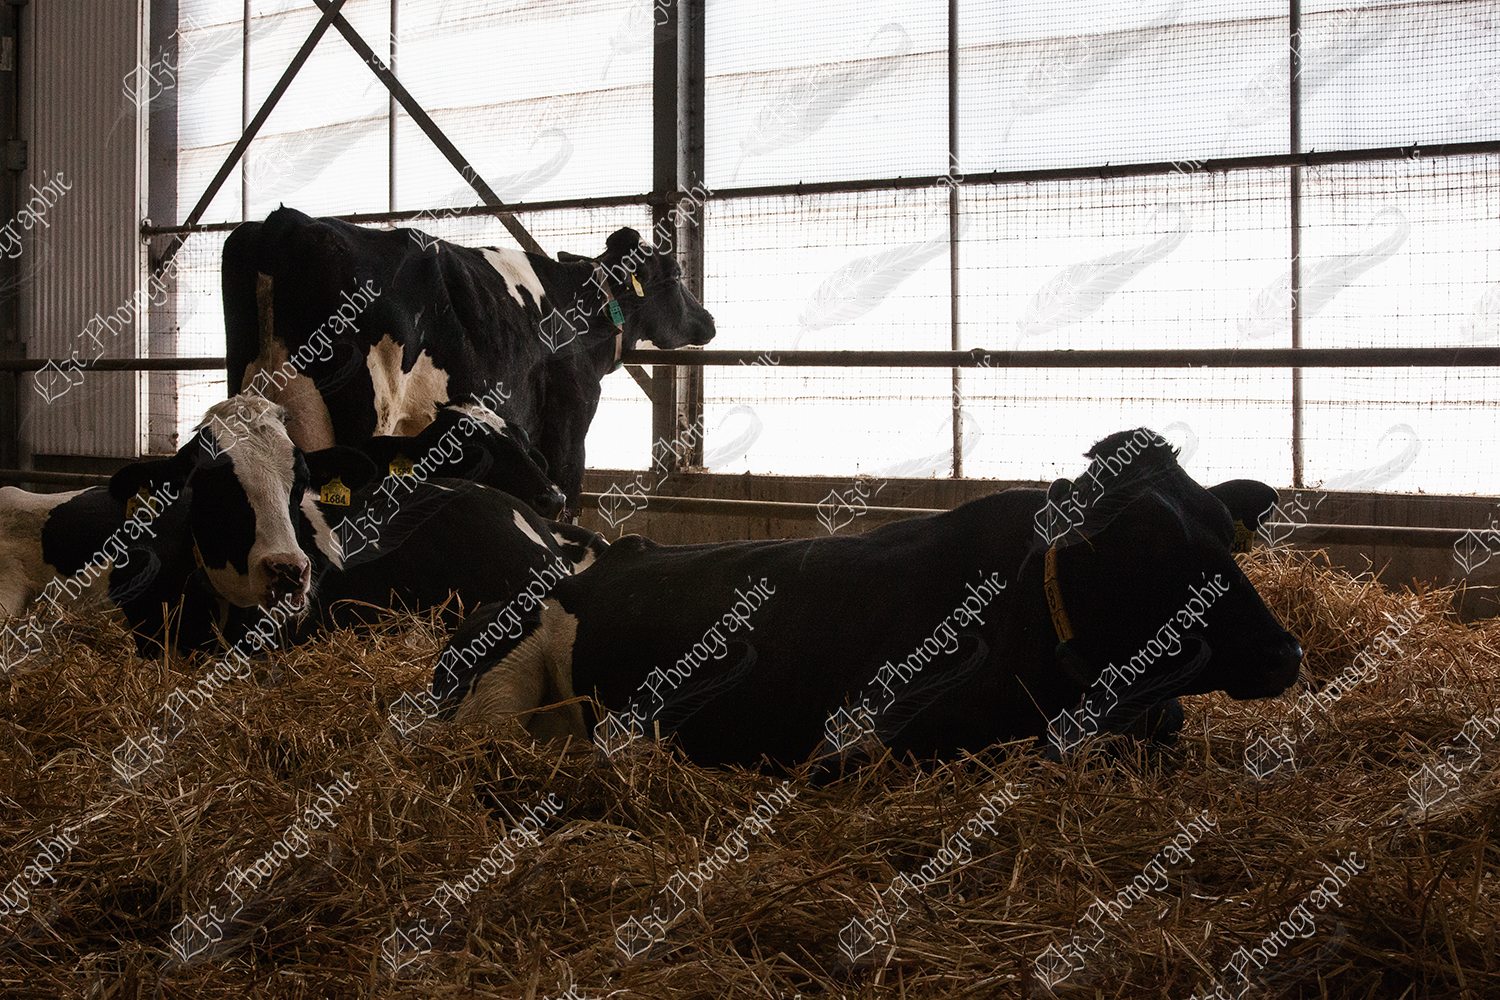 elze_photo_6067_groupe_vaches_preparation_group_cows_calving